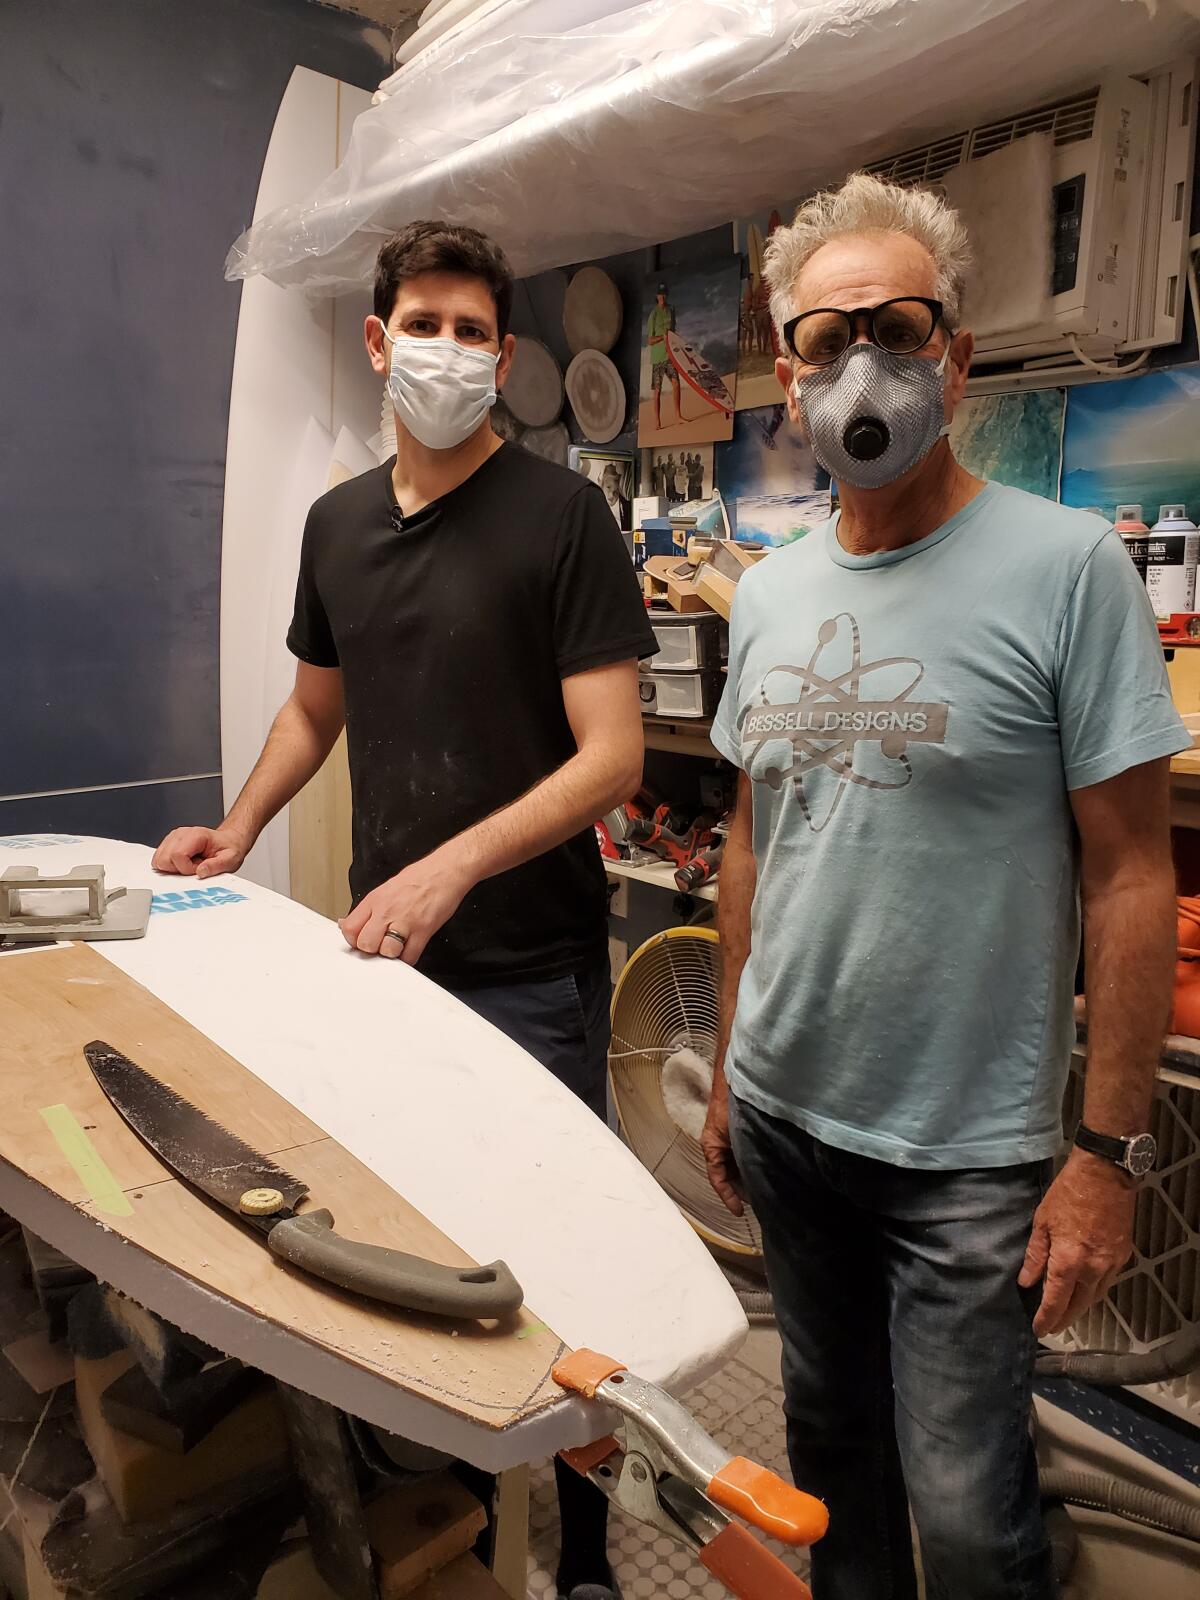 Author Daniel Seddiqui and La Jolla surfboard maker Tim Bessell discuss Bessell's craft.